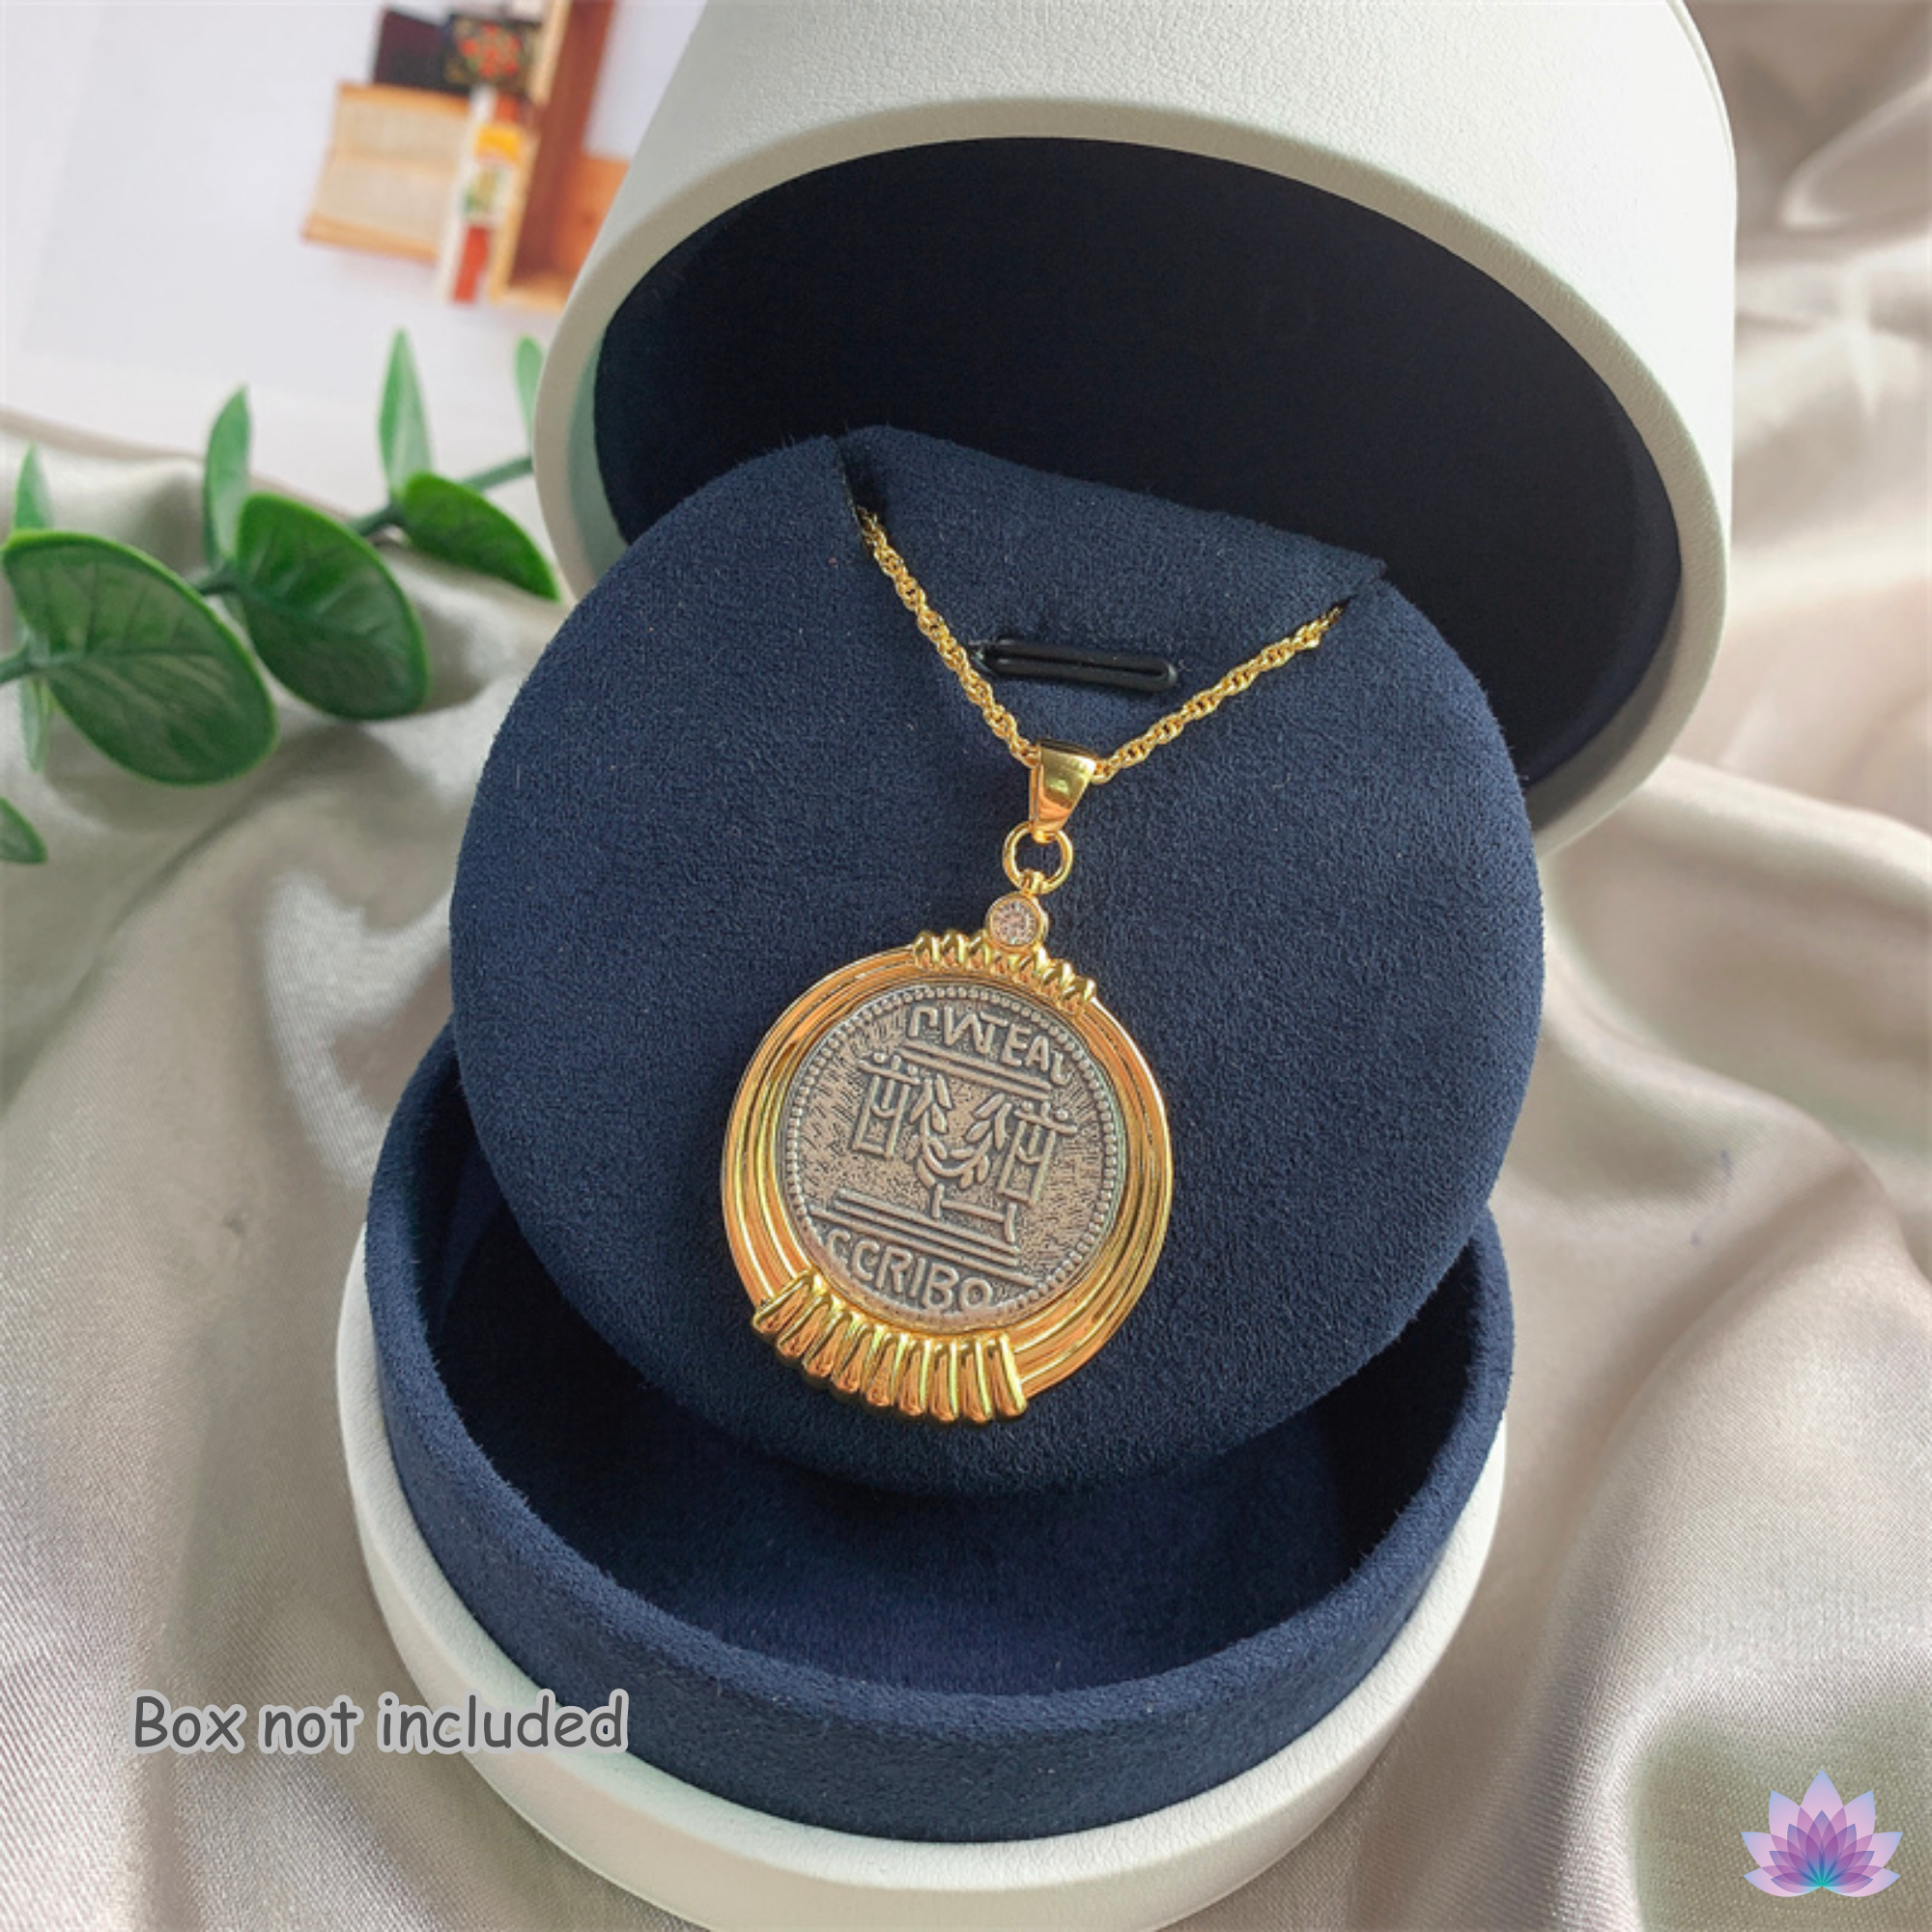 Bonus Eventus Roman Coin Necklace ⚬ Success Amulet Ancient Silver Denarius Replica Pendant ⚬ LIBO. BON. EVENT. Double-Sided Embossed Roman Republic Jewelry